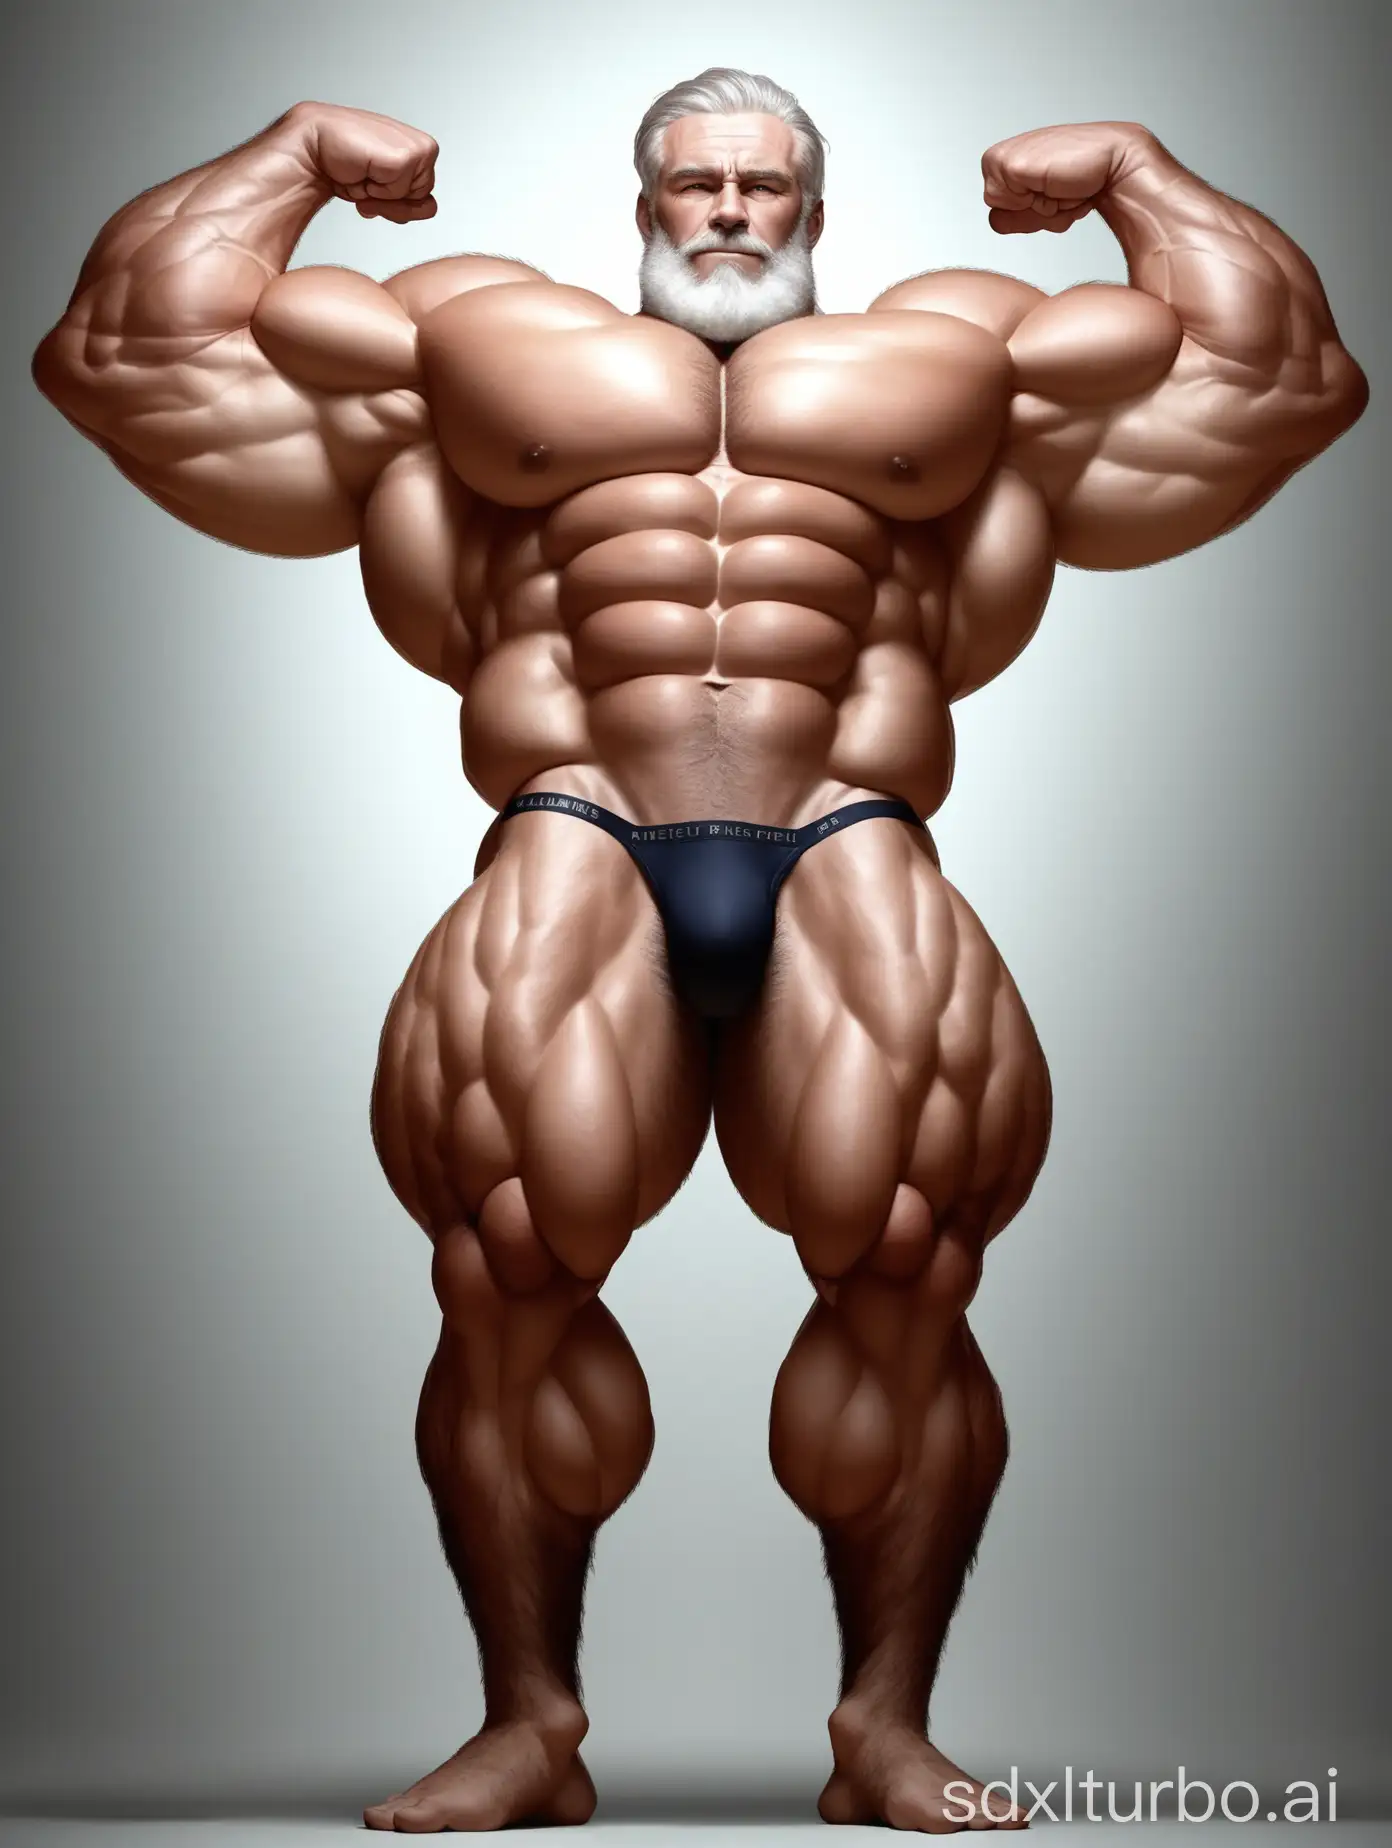 Handsome-Muscular-Giant-Man-Flexing-Biceps-in-Underwear